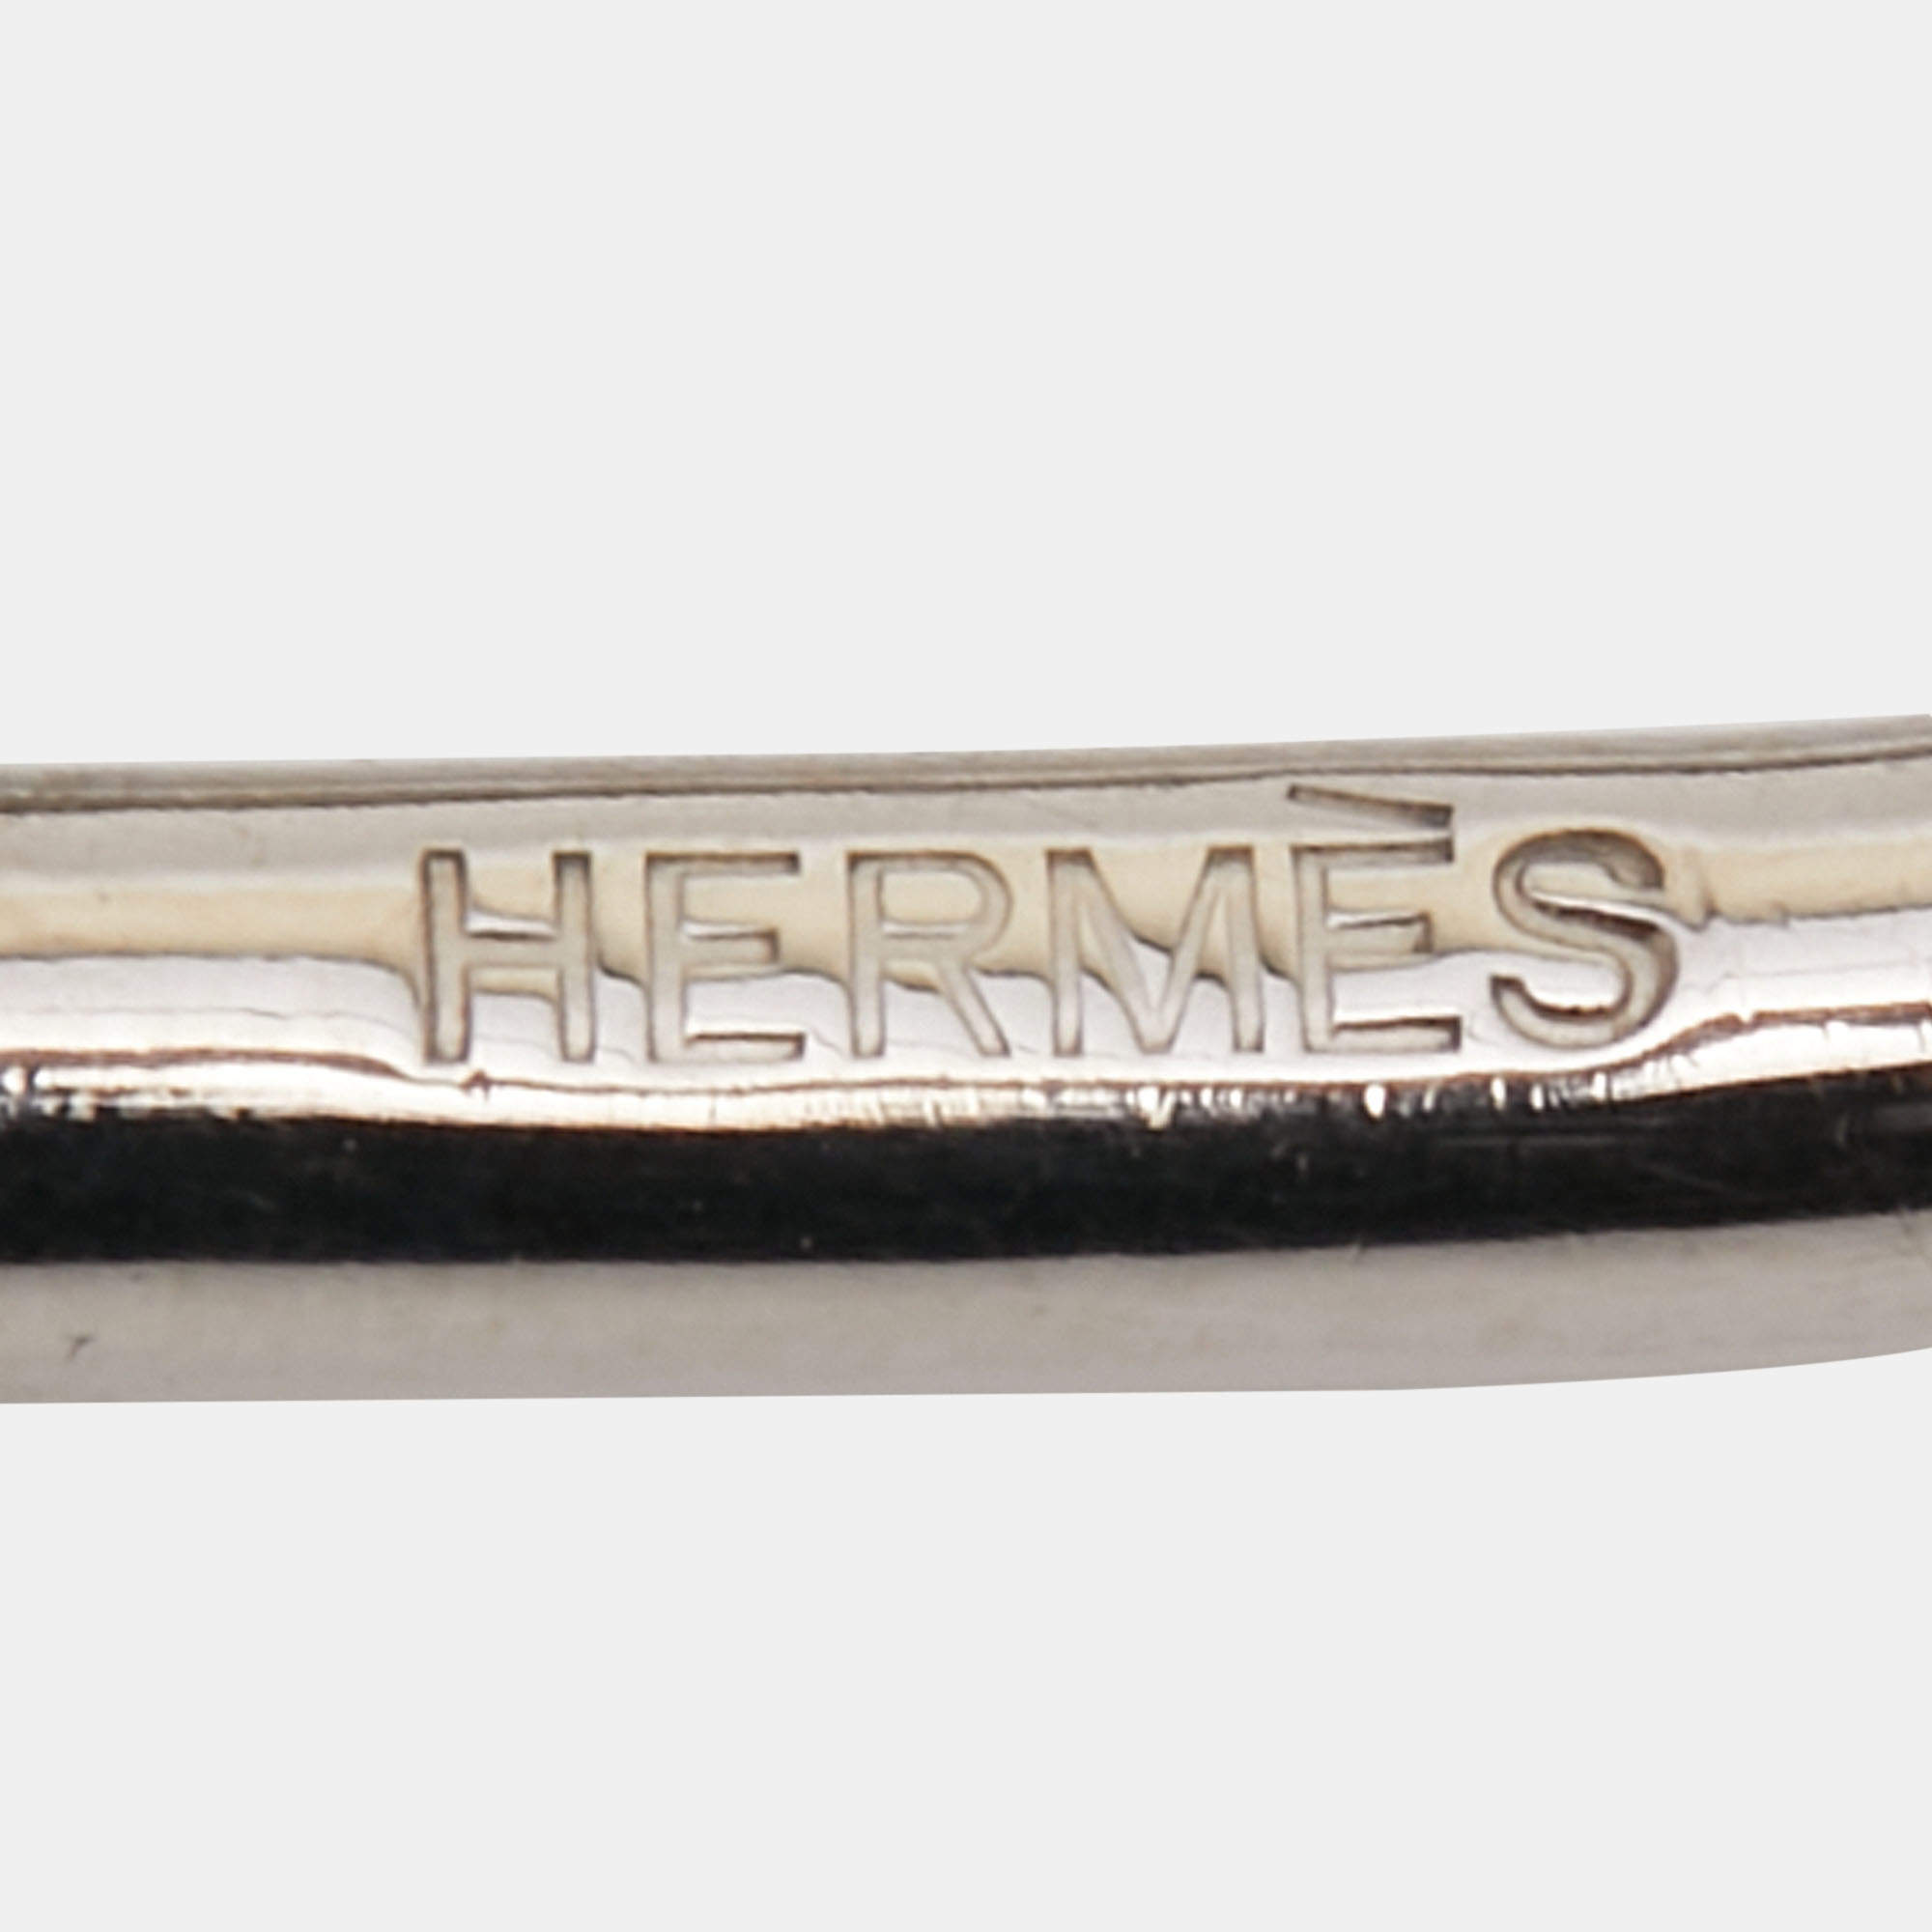 Hermes Cadena Heart Silver Tone Lock Bag Charm Hermes